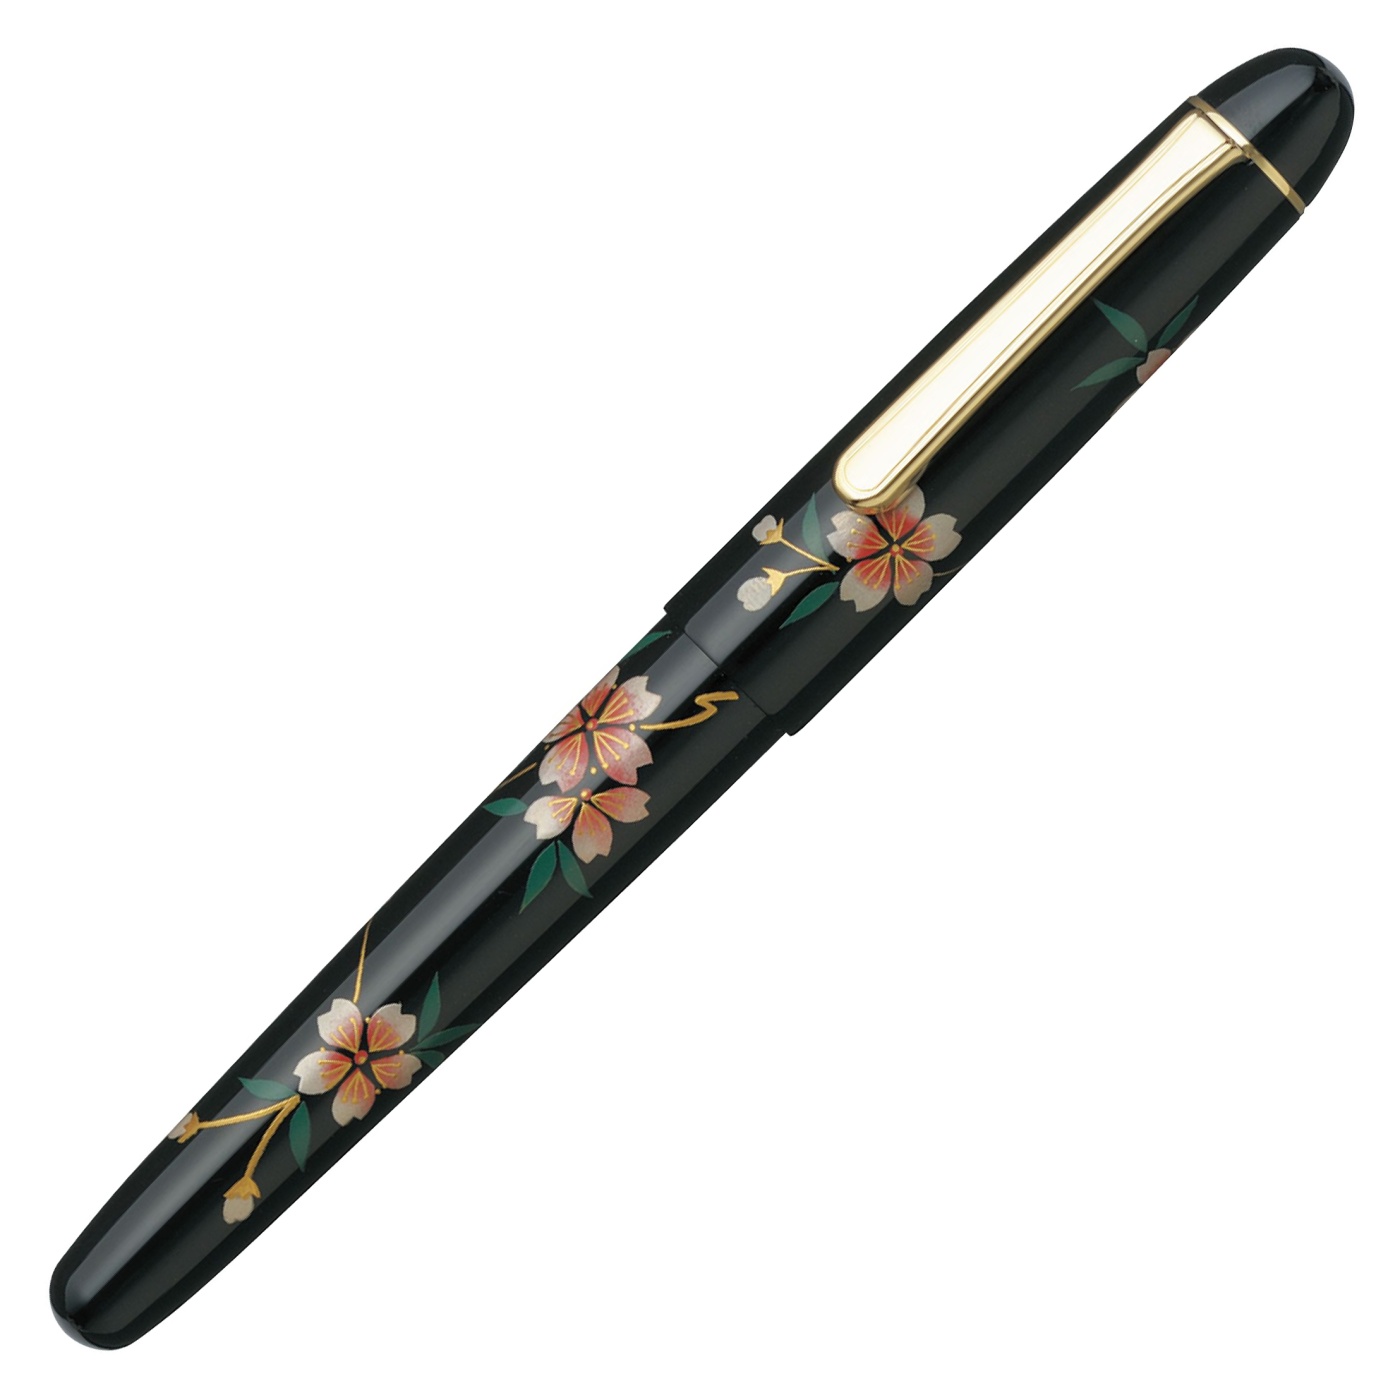 Kaga' Hira Maki-e Fountain pen Sakura in the group Pens / Fine Writing / Gift Pens at Pen Store (109850_r)